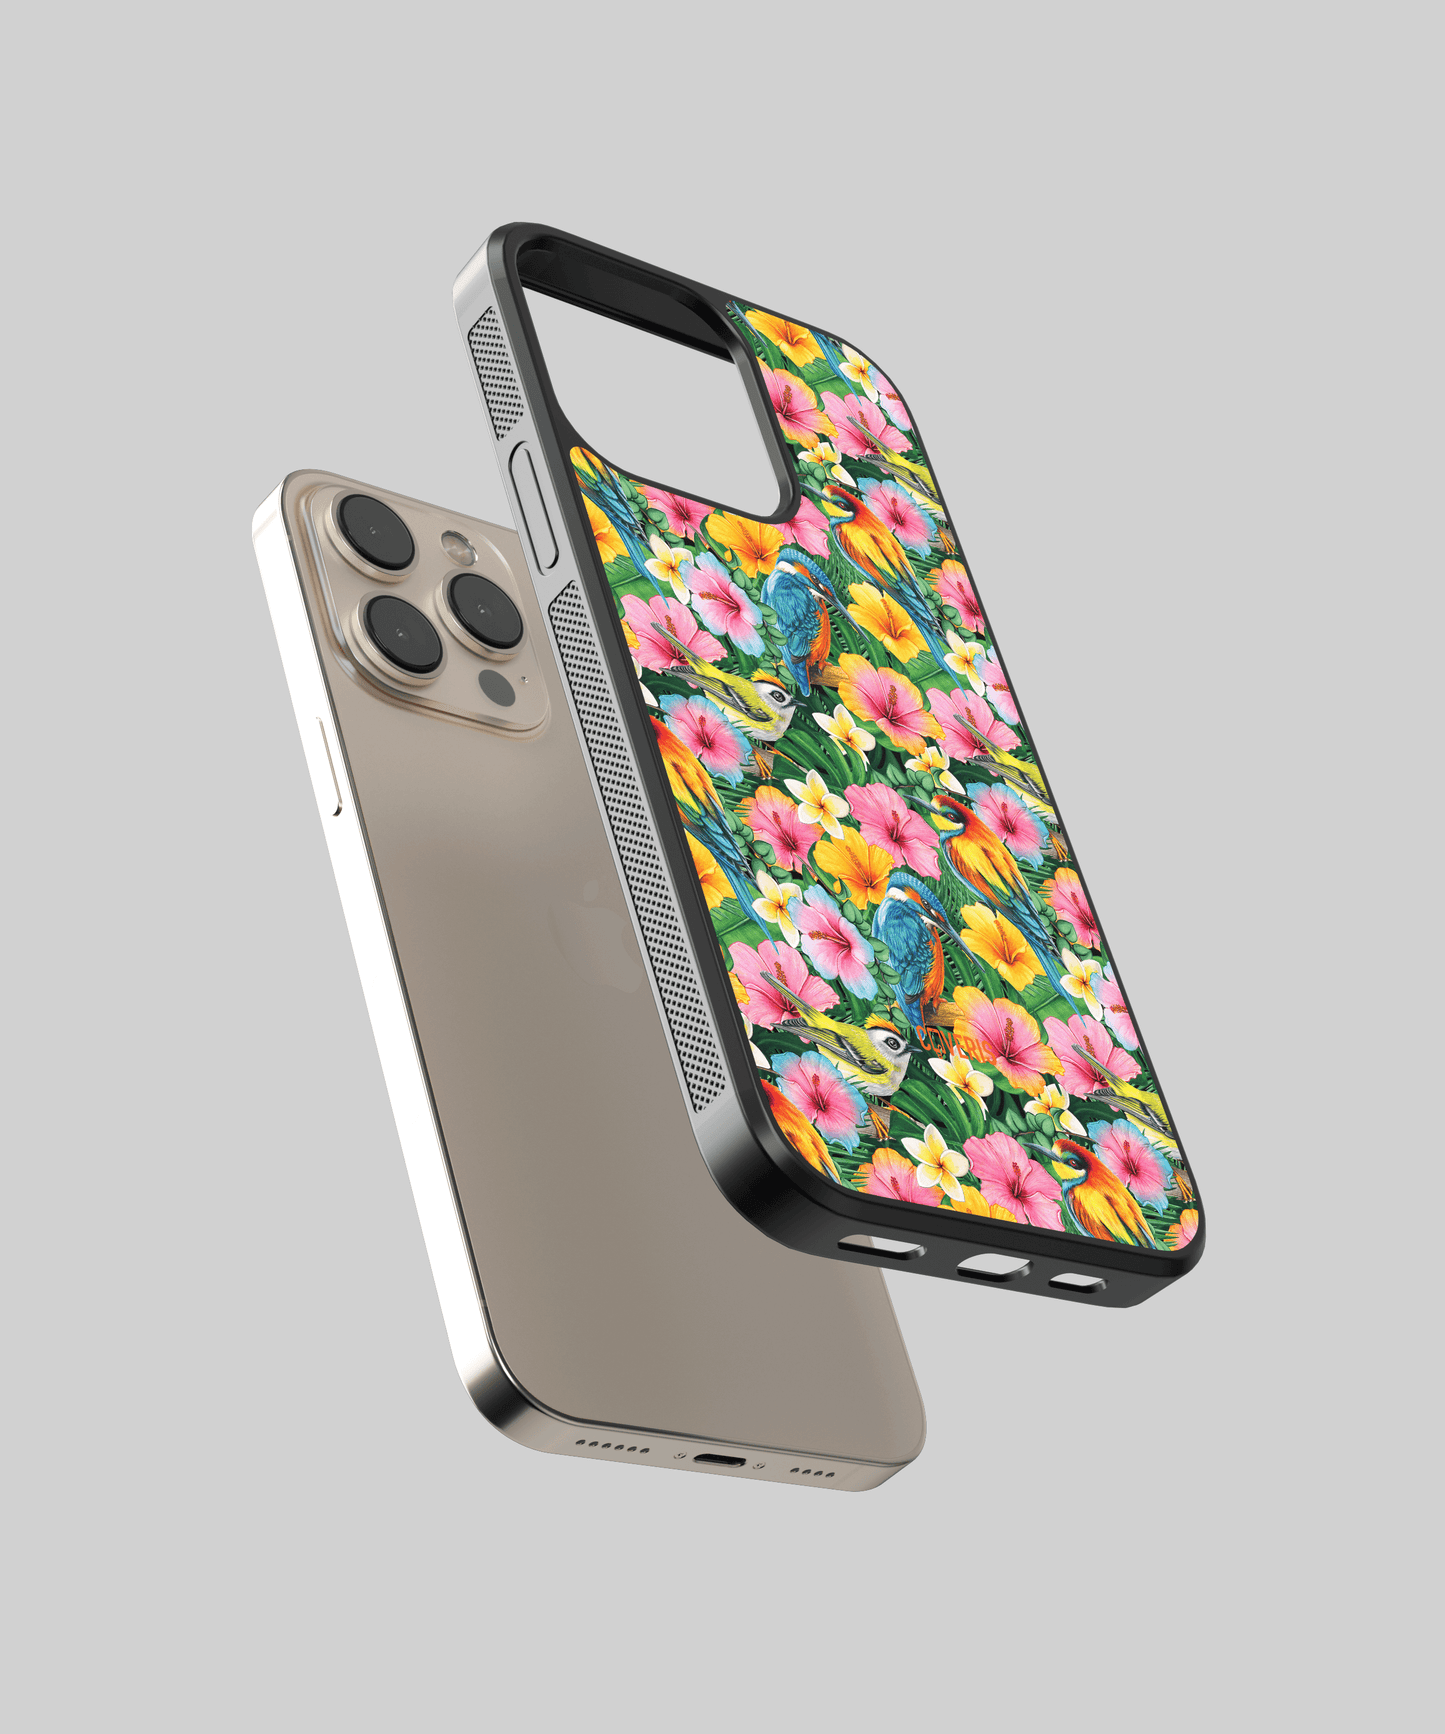 Islander - iPhone 7 / 8 phone case